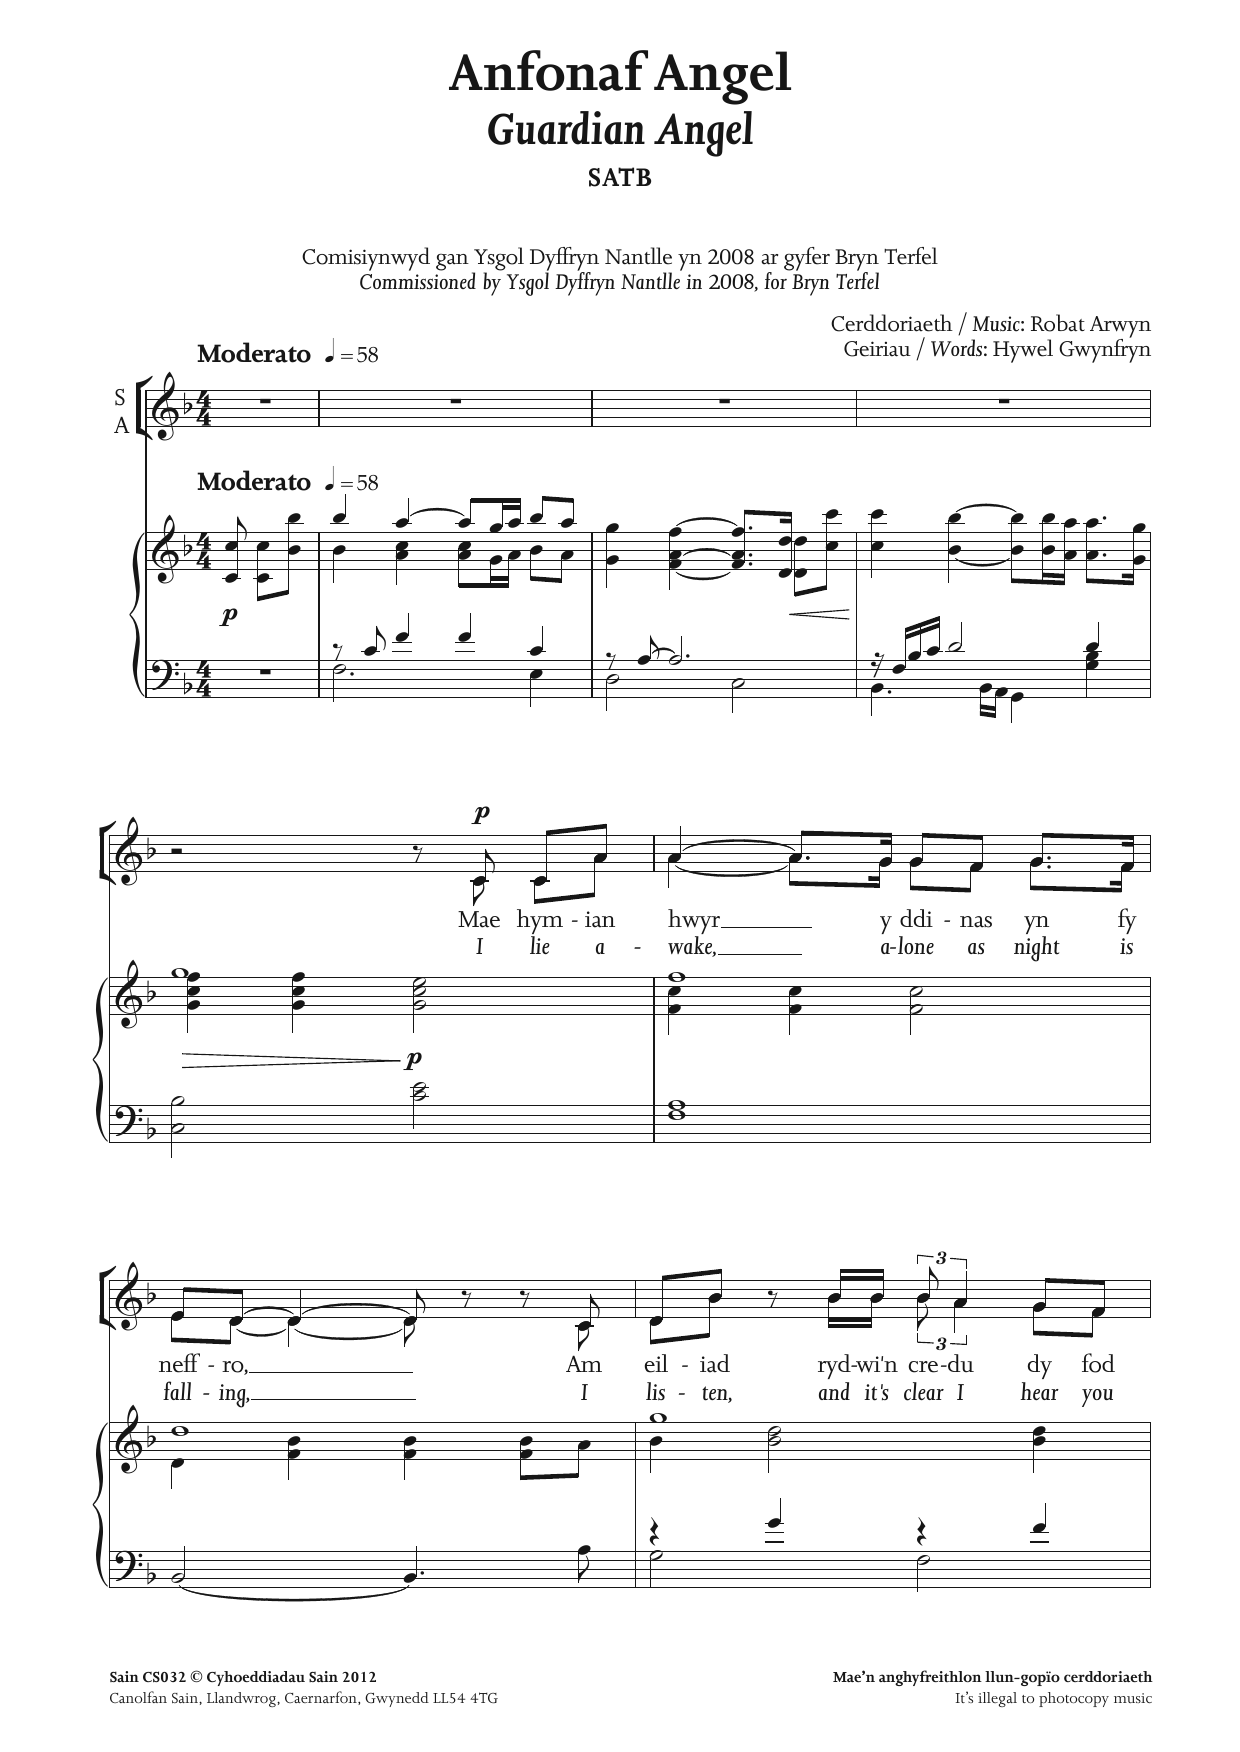 Robat Arwyn Anfonaf Angel (Guardian Angel) Sheet Music Notes & Chords for SATB - Download or Print PDF